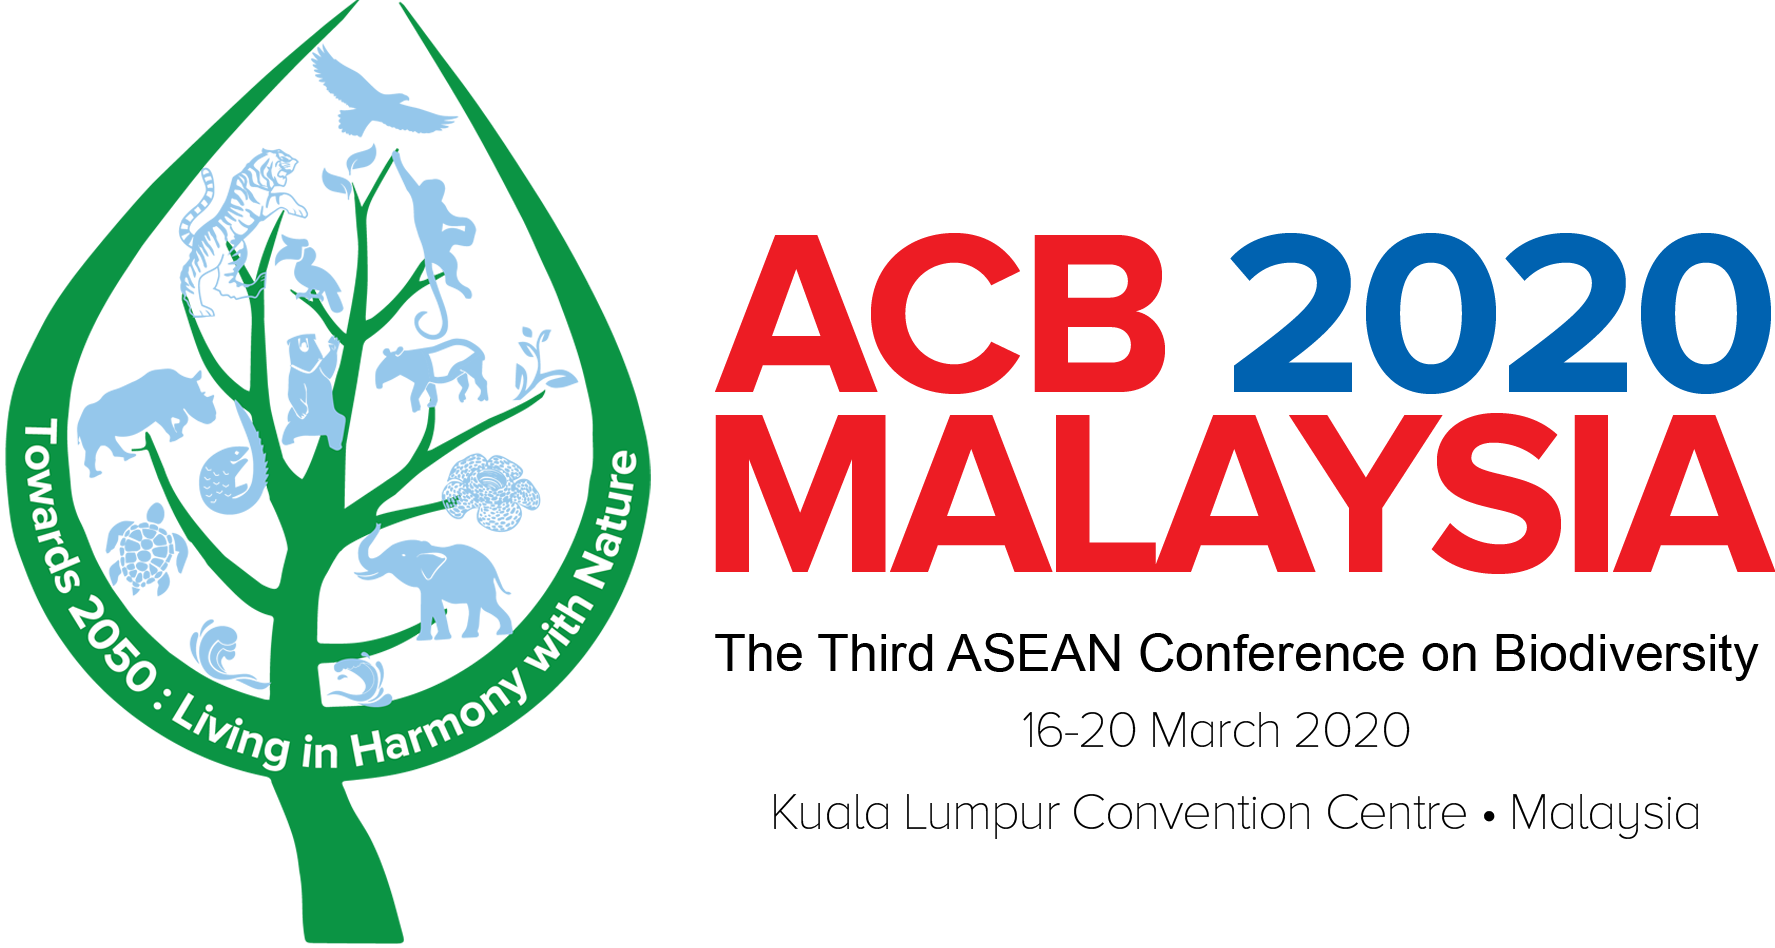 ACB 2020